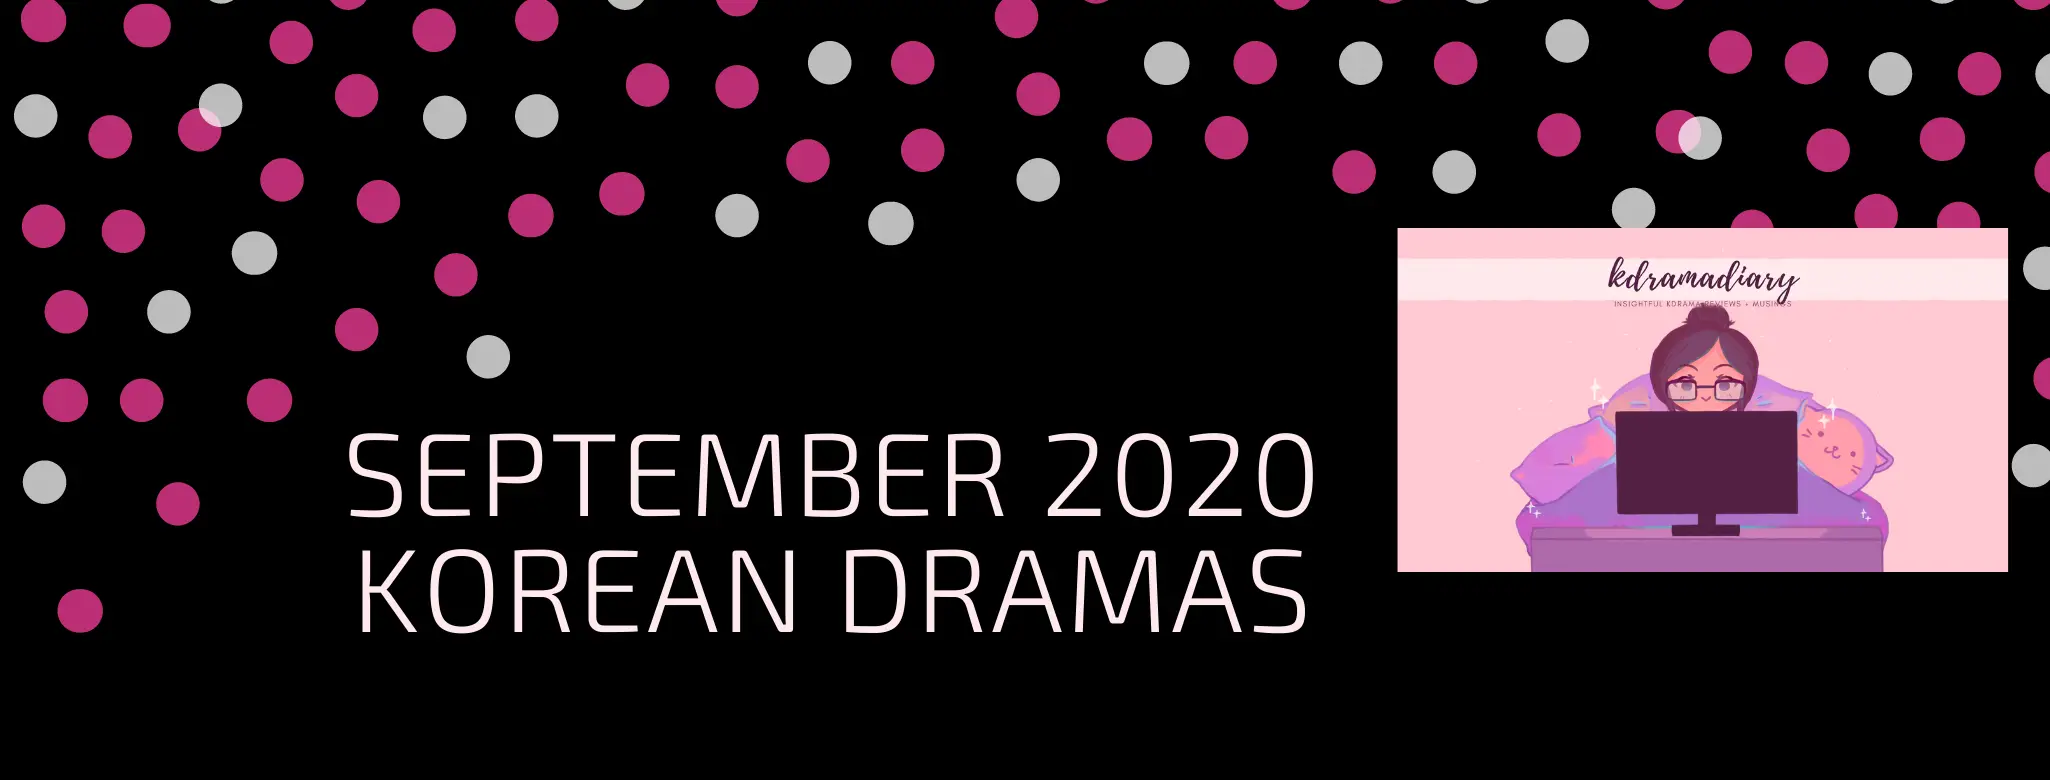 September 2020 Korean Dramas kdramadiary